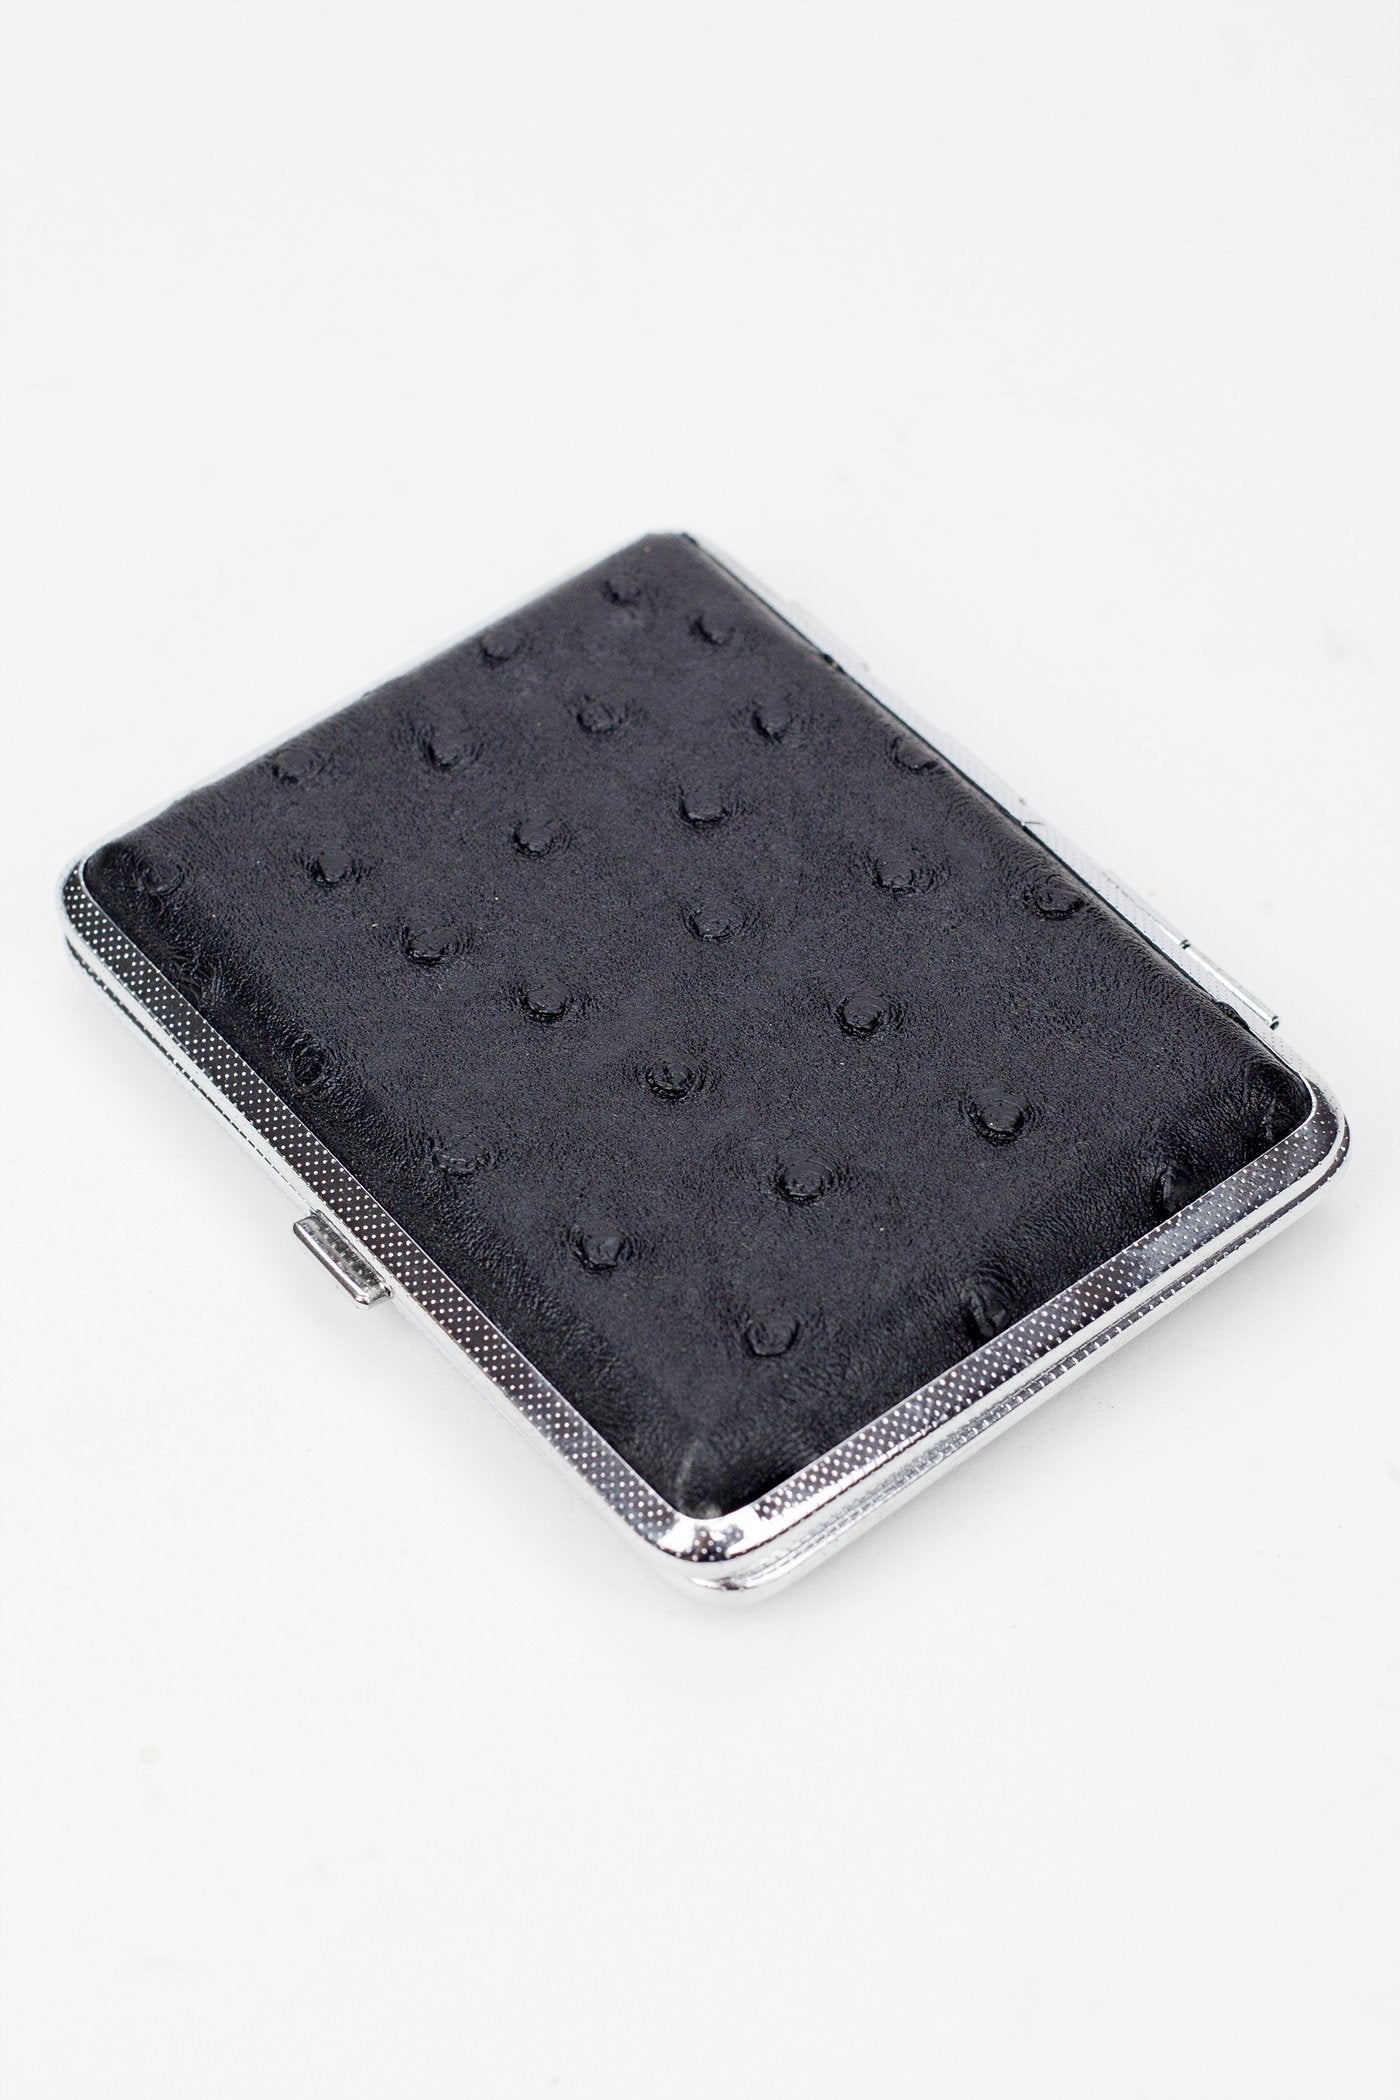 Metal Leather B Cigarette Case Box of 12_3